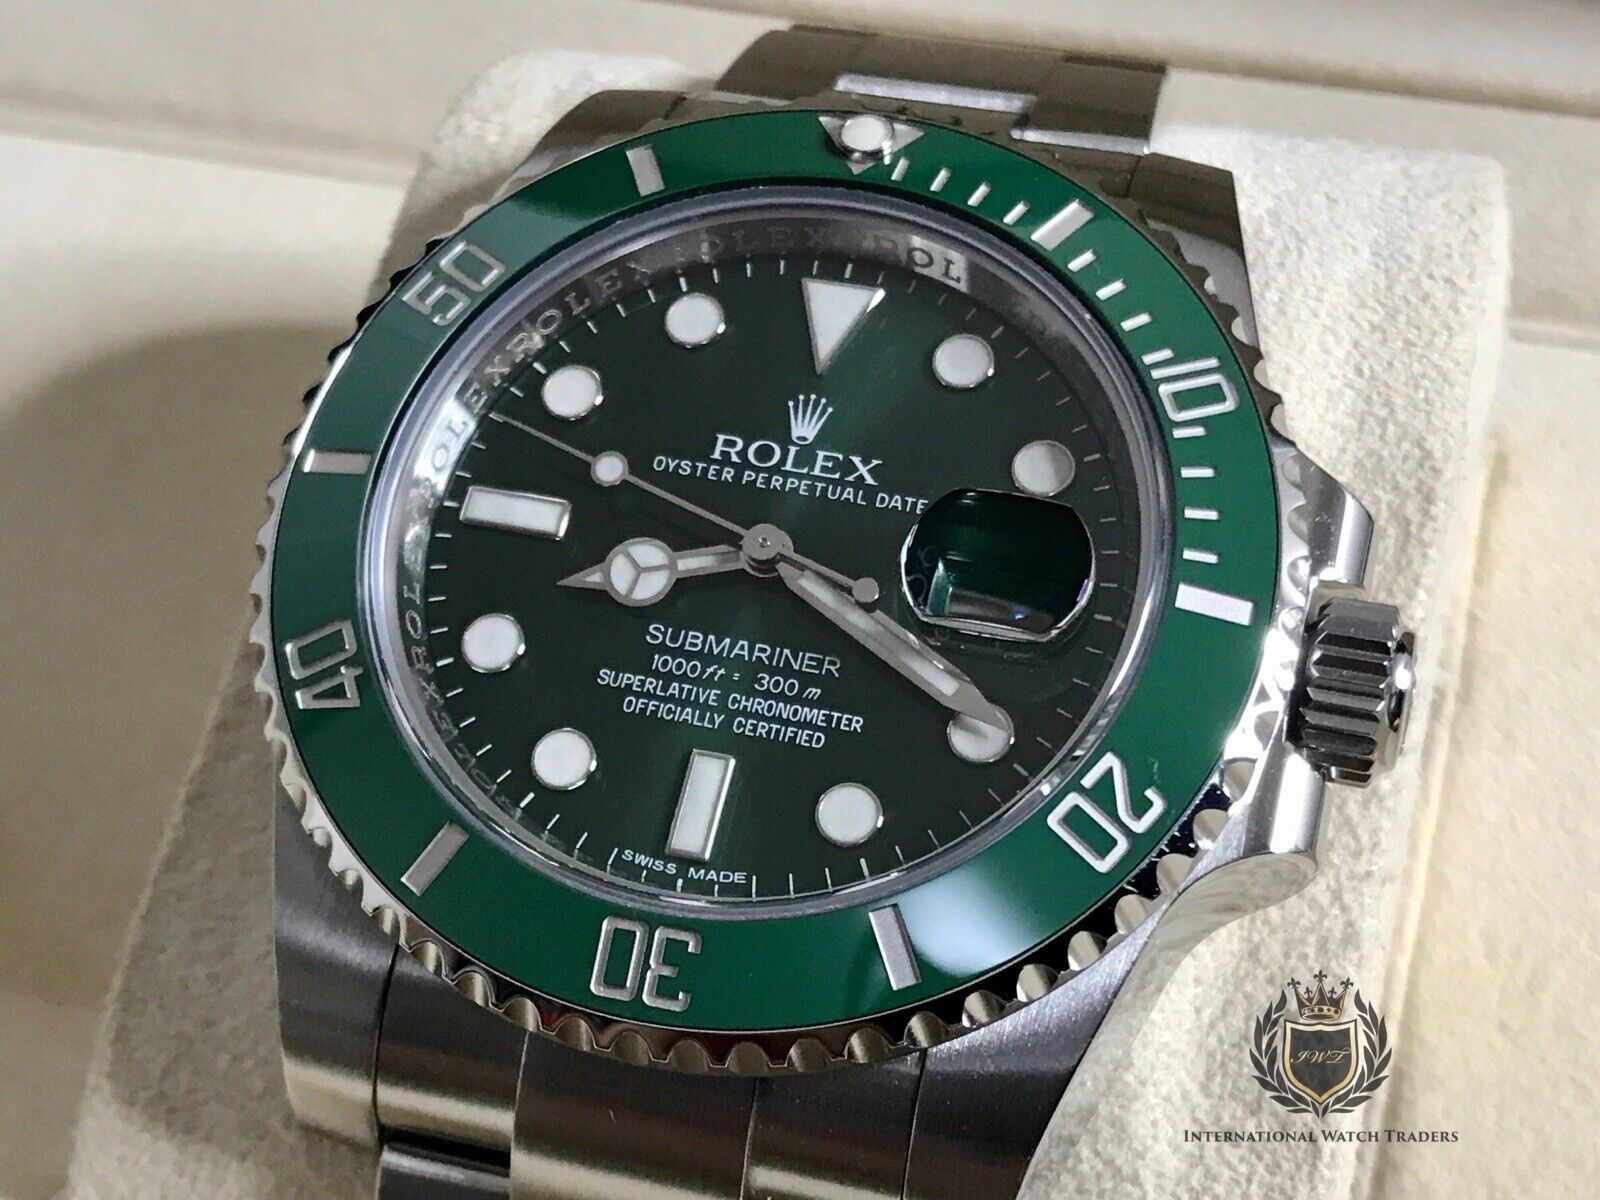 Rolex Submariner Date Hulk 40mm 116610LV Green Dial for $16,225